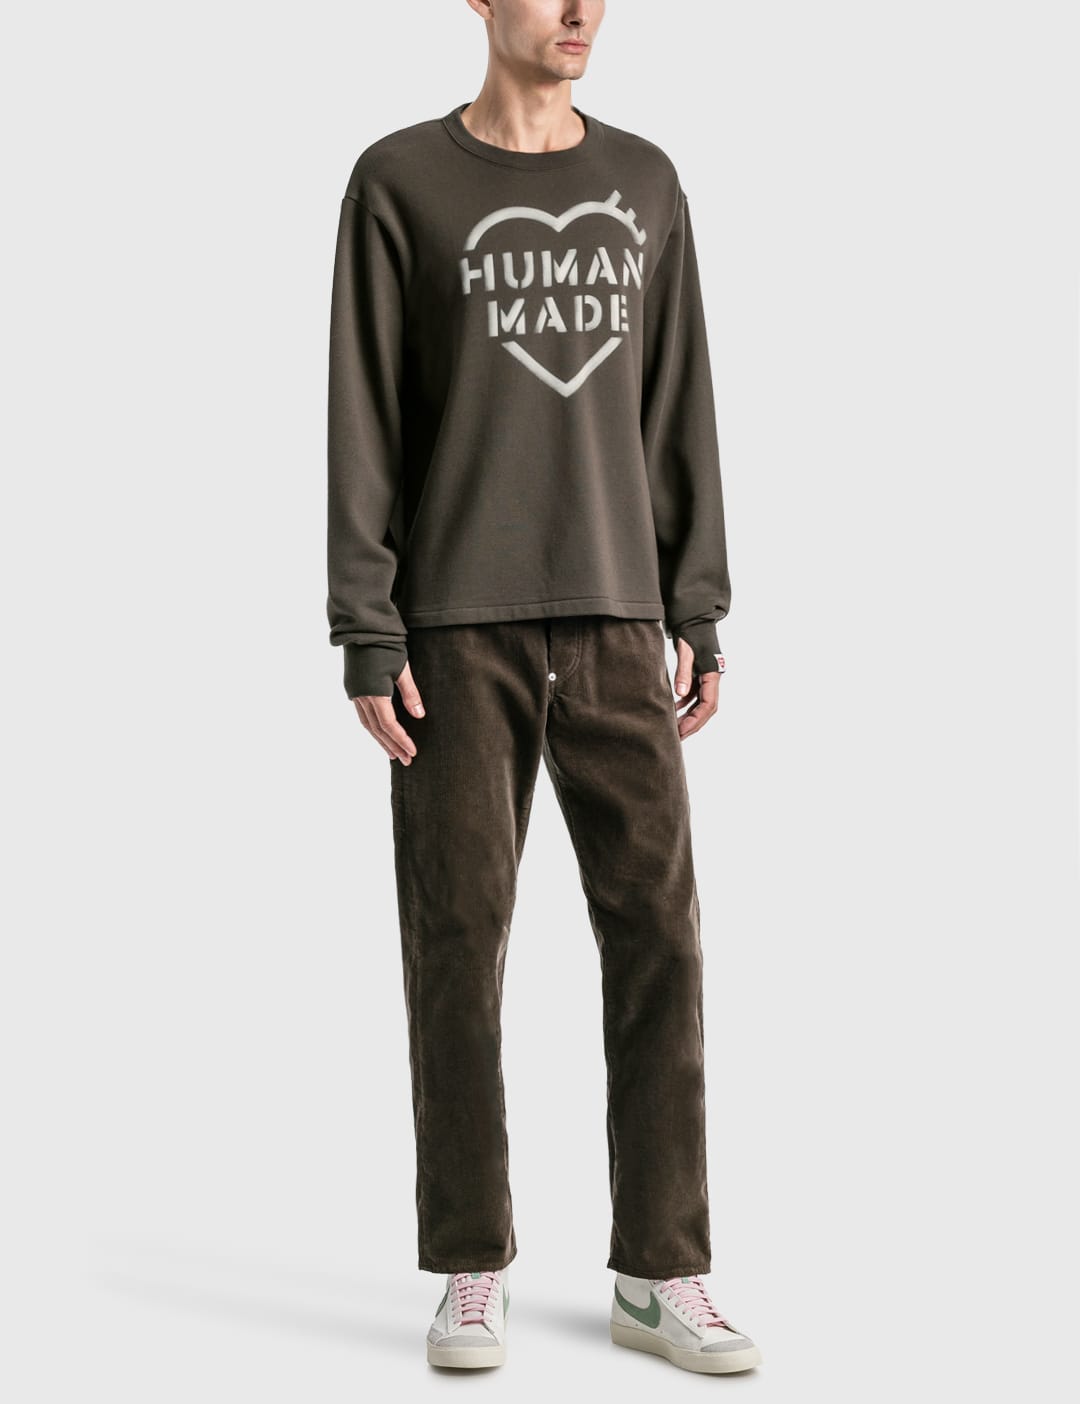 Human Made - Military Sweatshirt | HBX - Globally Curated Fashion